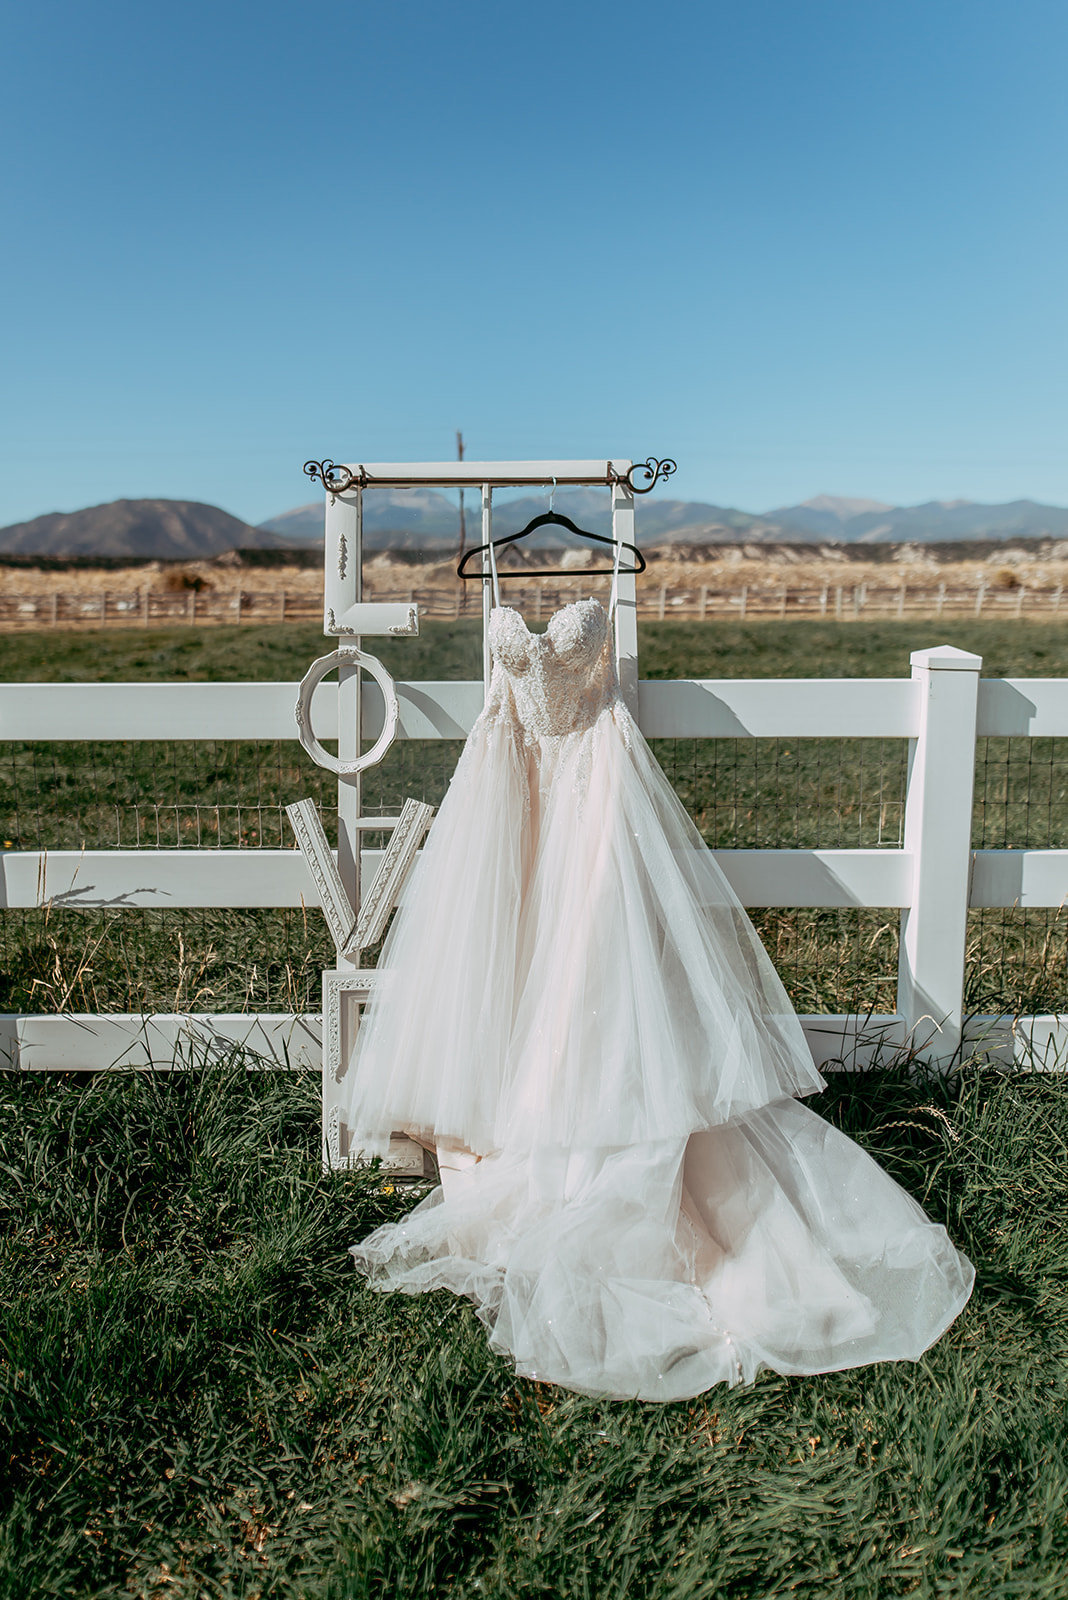 Chelsea Kyaw Photo-Colorado Wedding Photographer-Details011